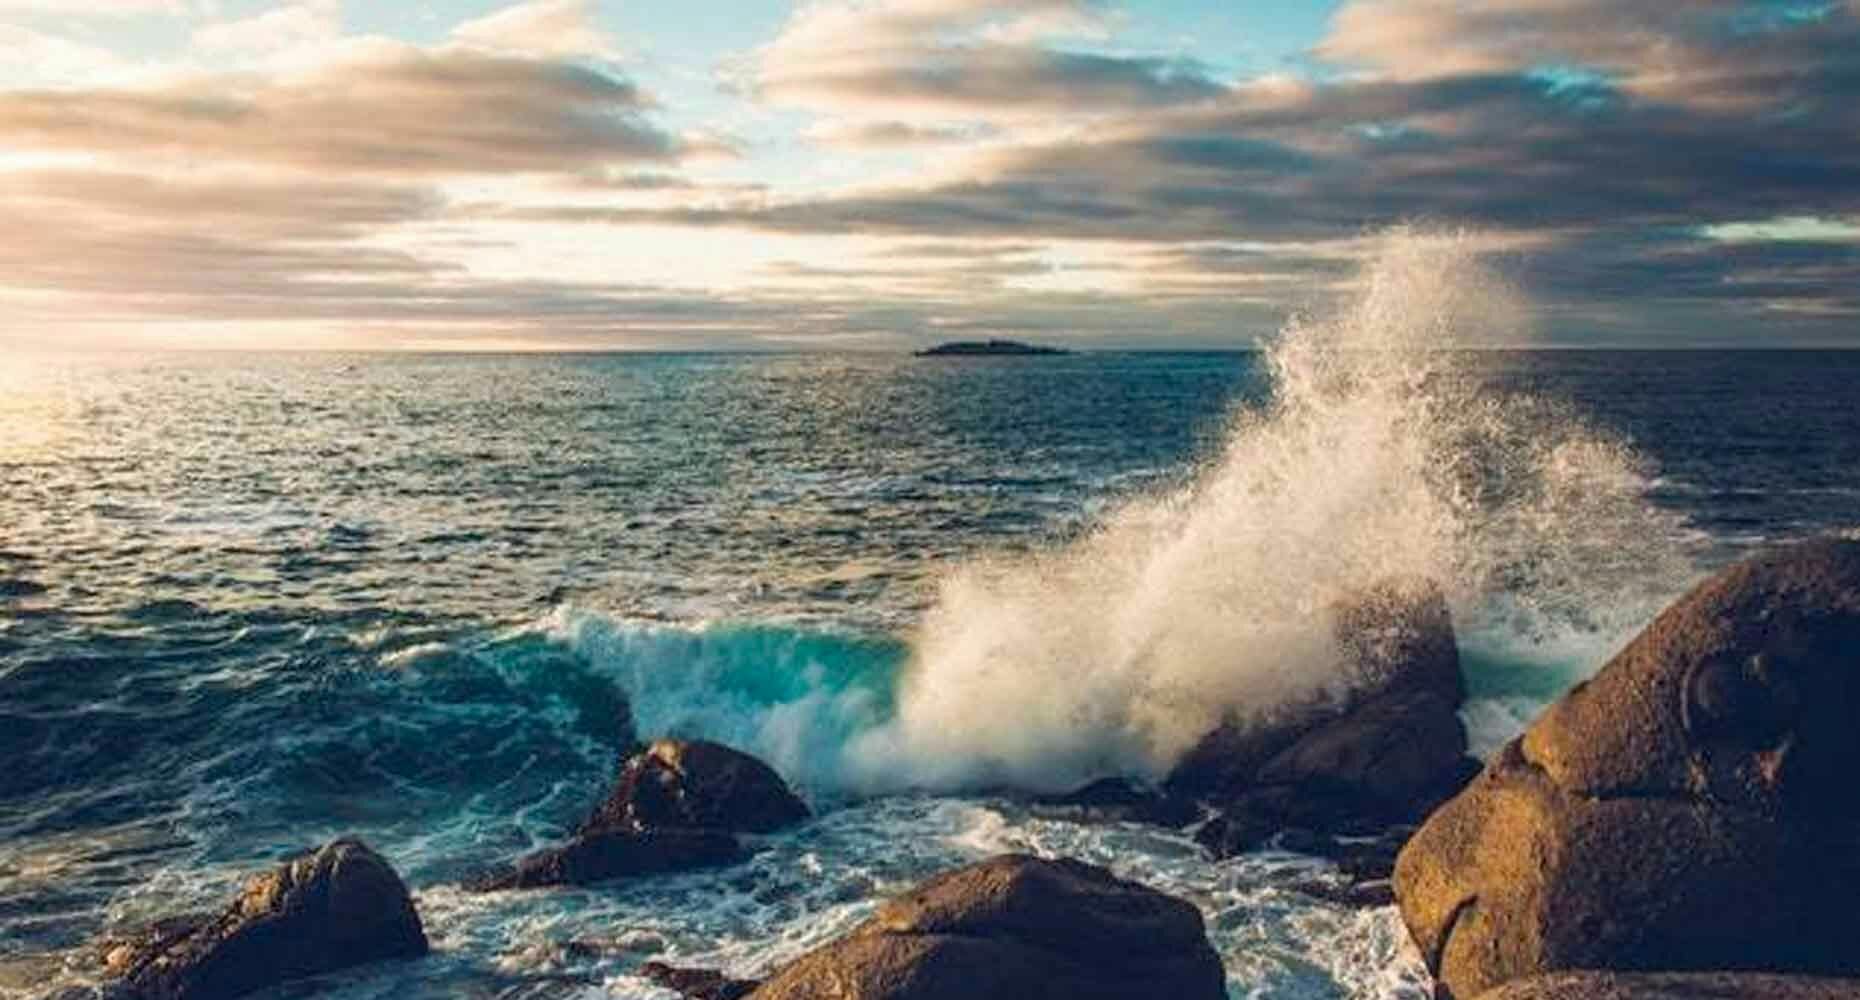 waves crashing on a rock